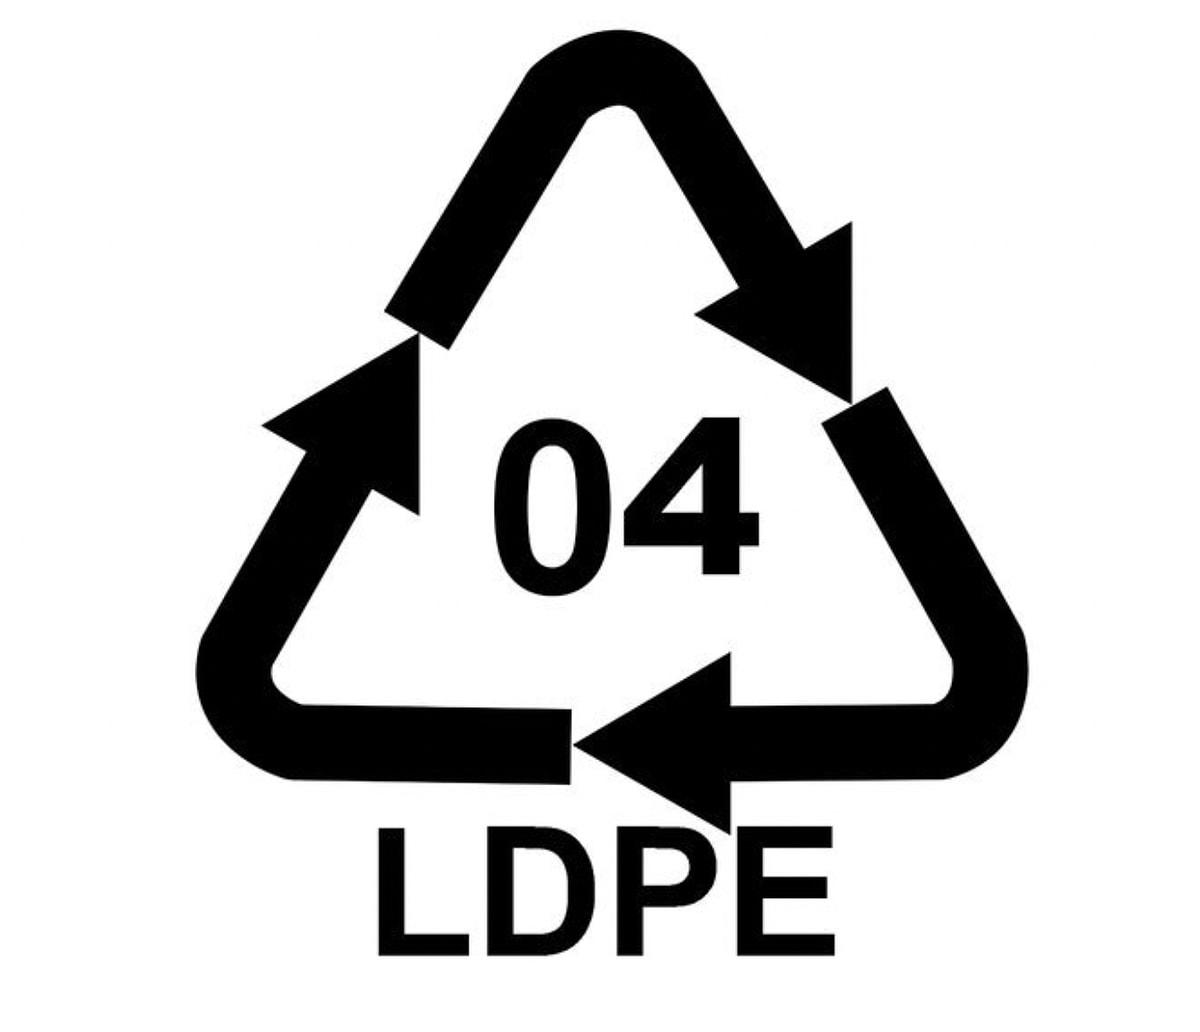 Ldpe это. Петля Мебиуса 4 LDPE. Маркировка 4 LDPE. Маркировка пластика 4 LDPE. Значок петля Мебиуса 4 LDPE.